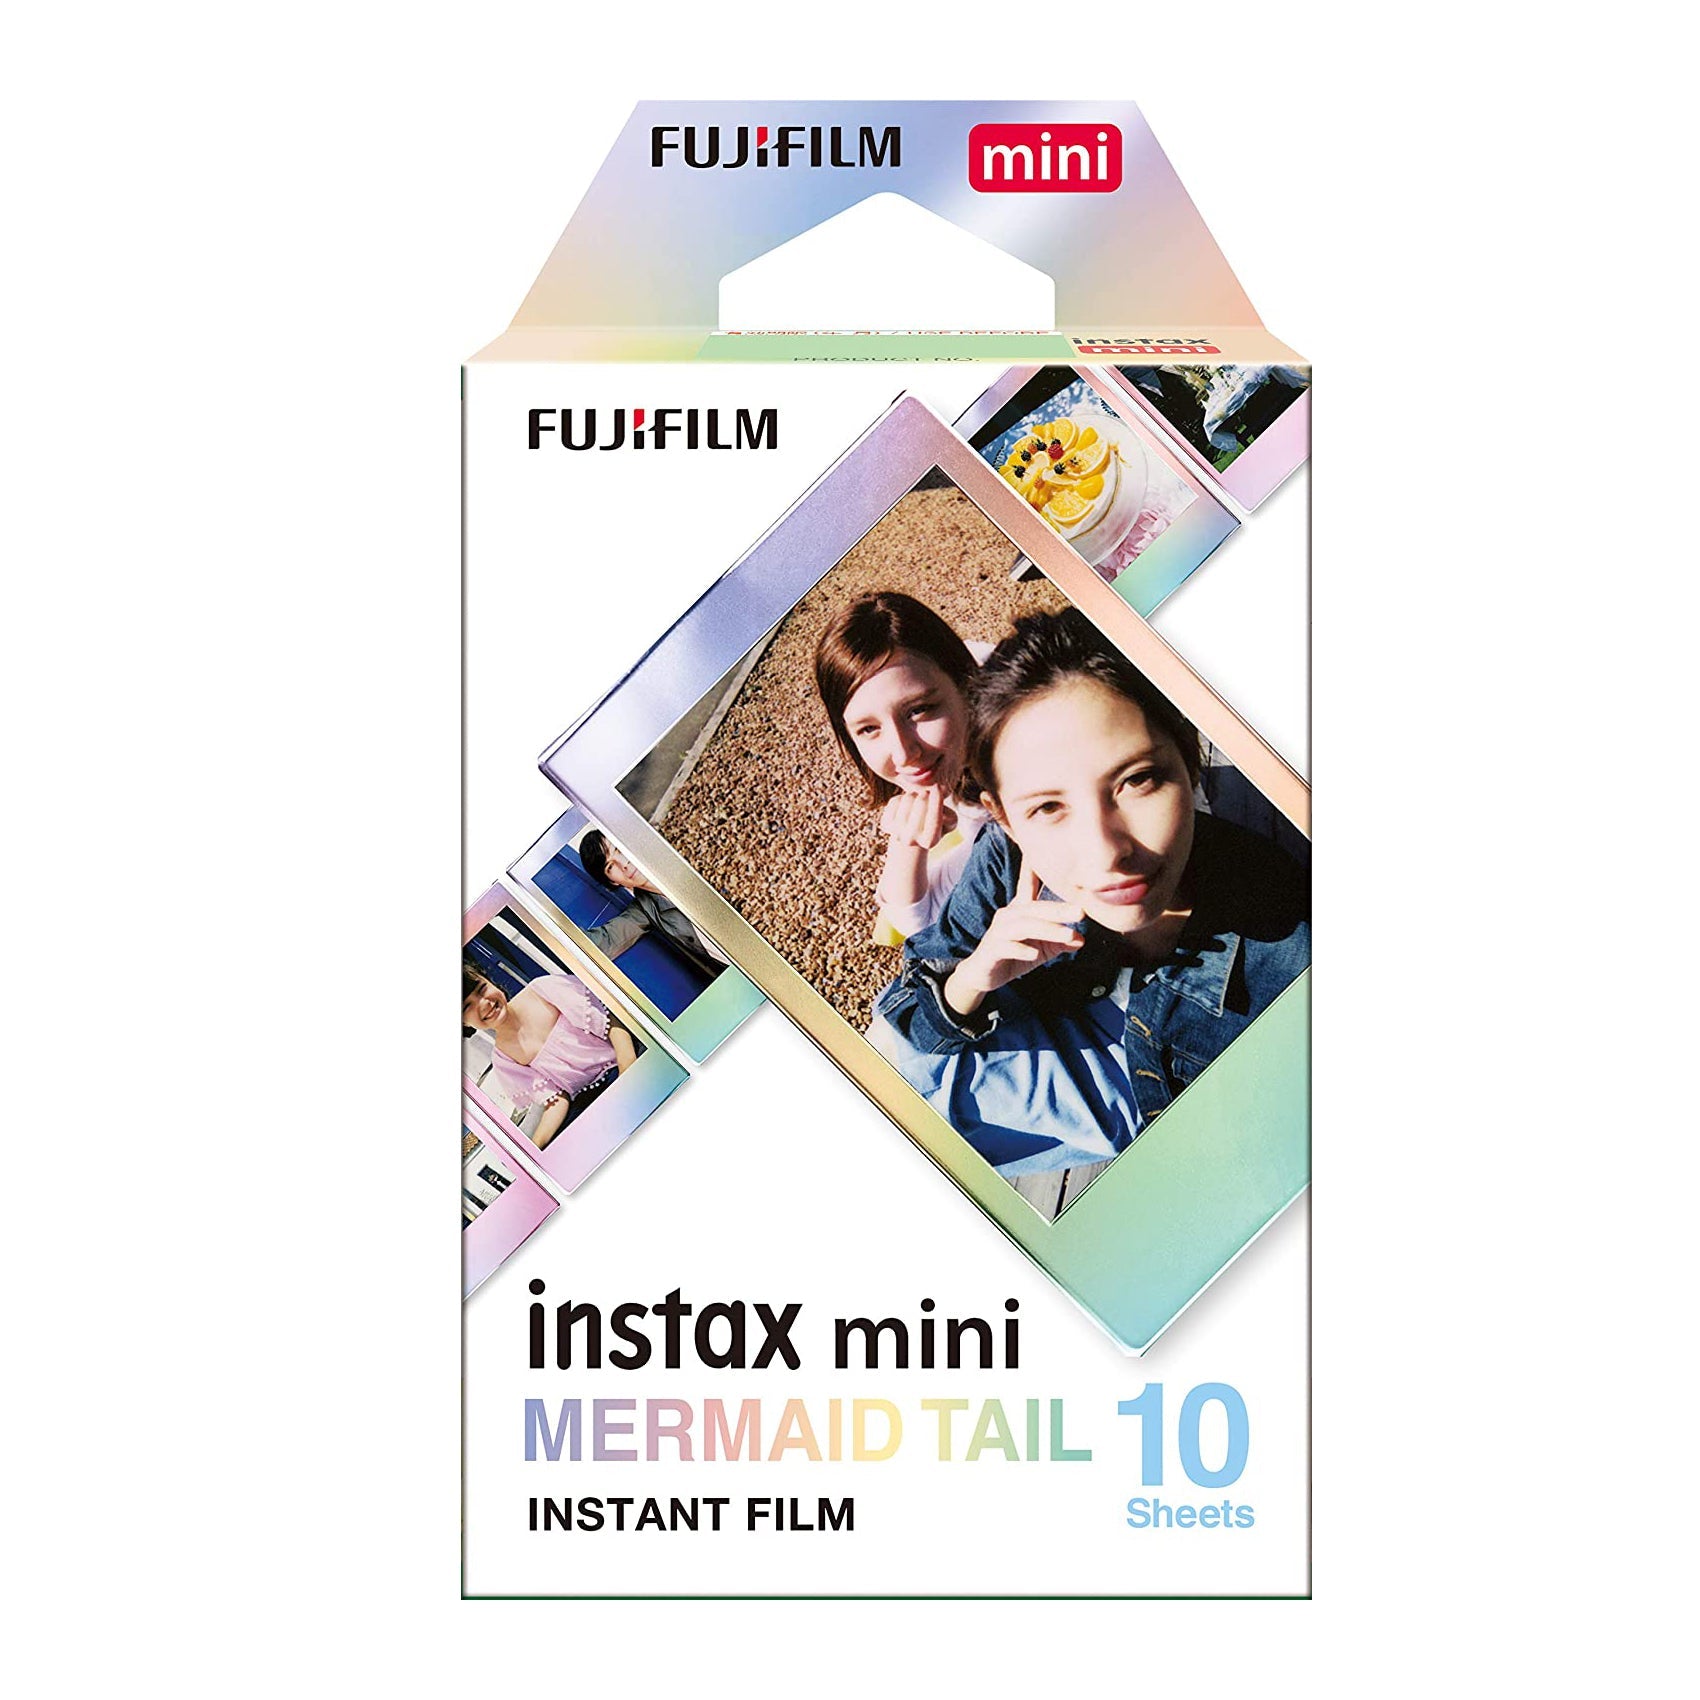 Fujifilm Instax Mini 10X1 mermaid tail Instant Film with Instax Time Photo Album 64 Sheets (FLAMINGO PINK)